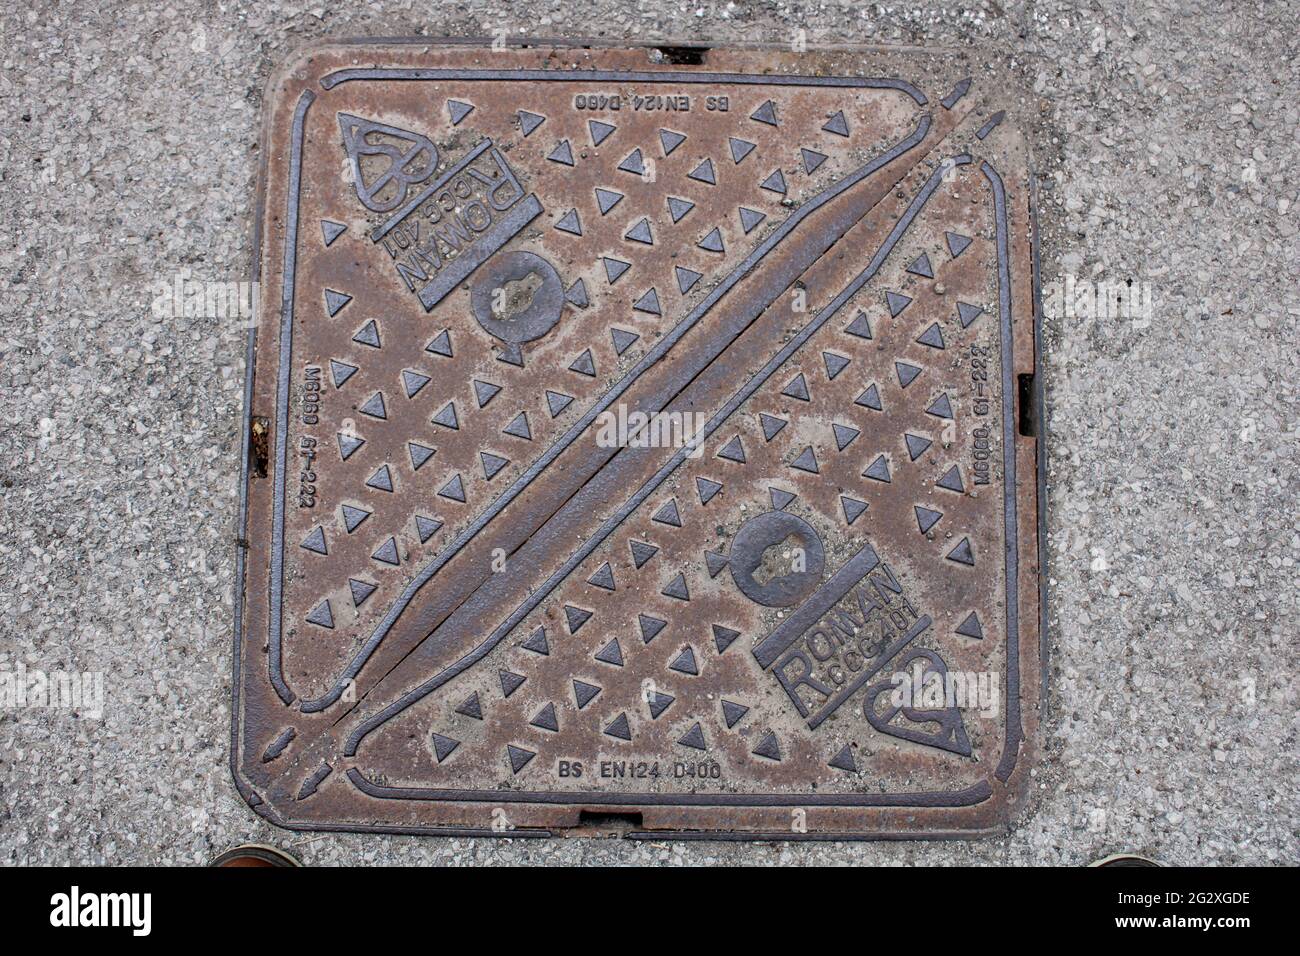 Textured manhole cover, Roman CCG 401 manhole cover Stock Photo